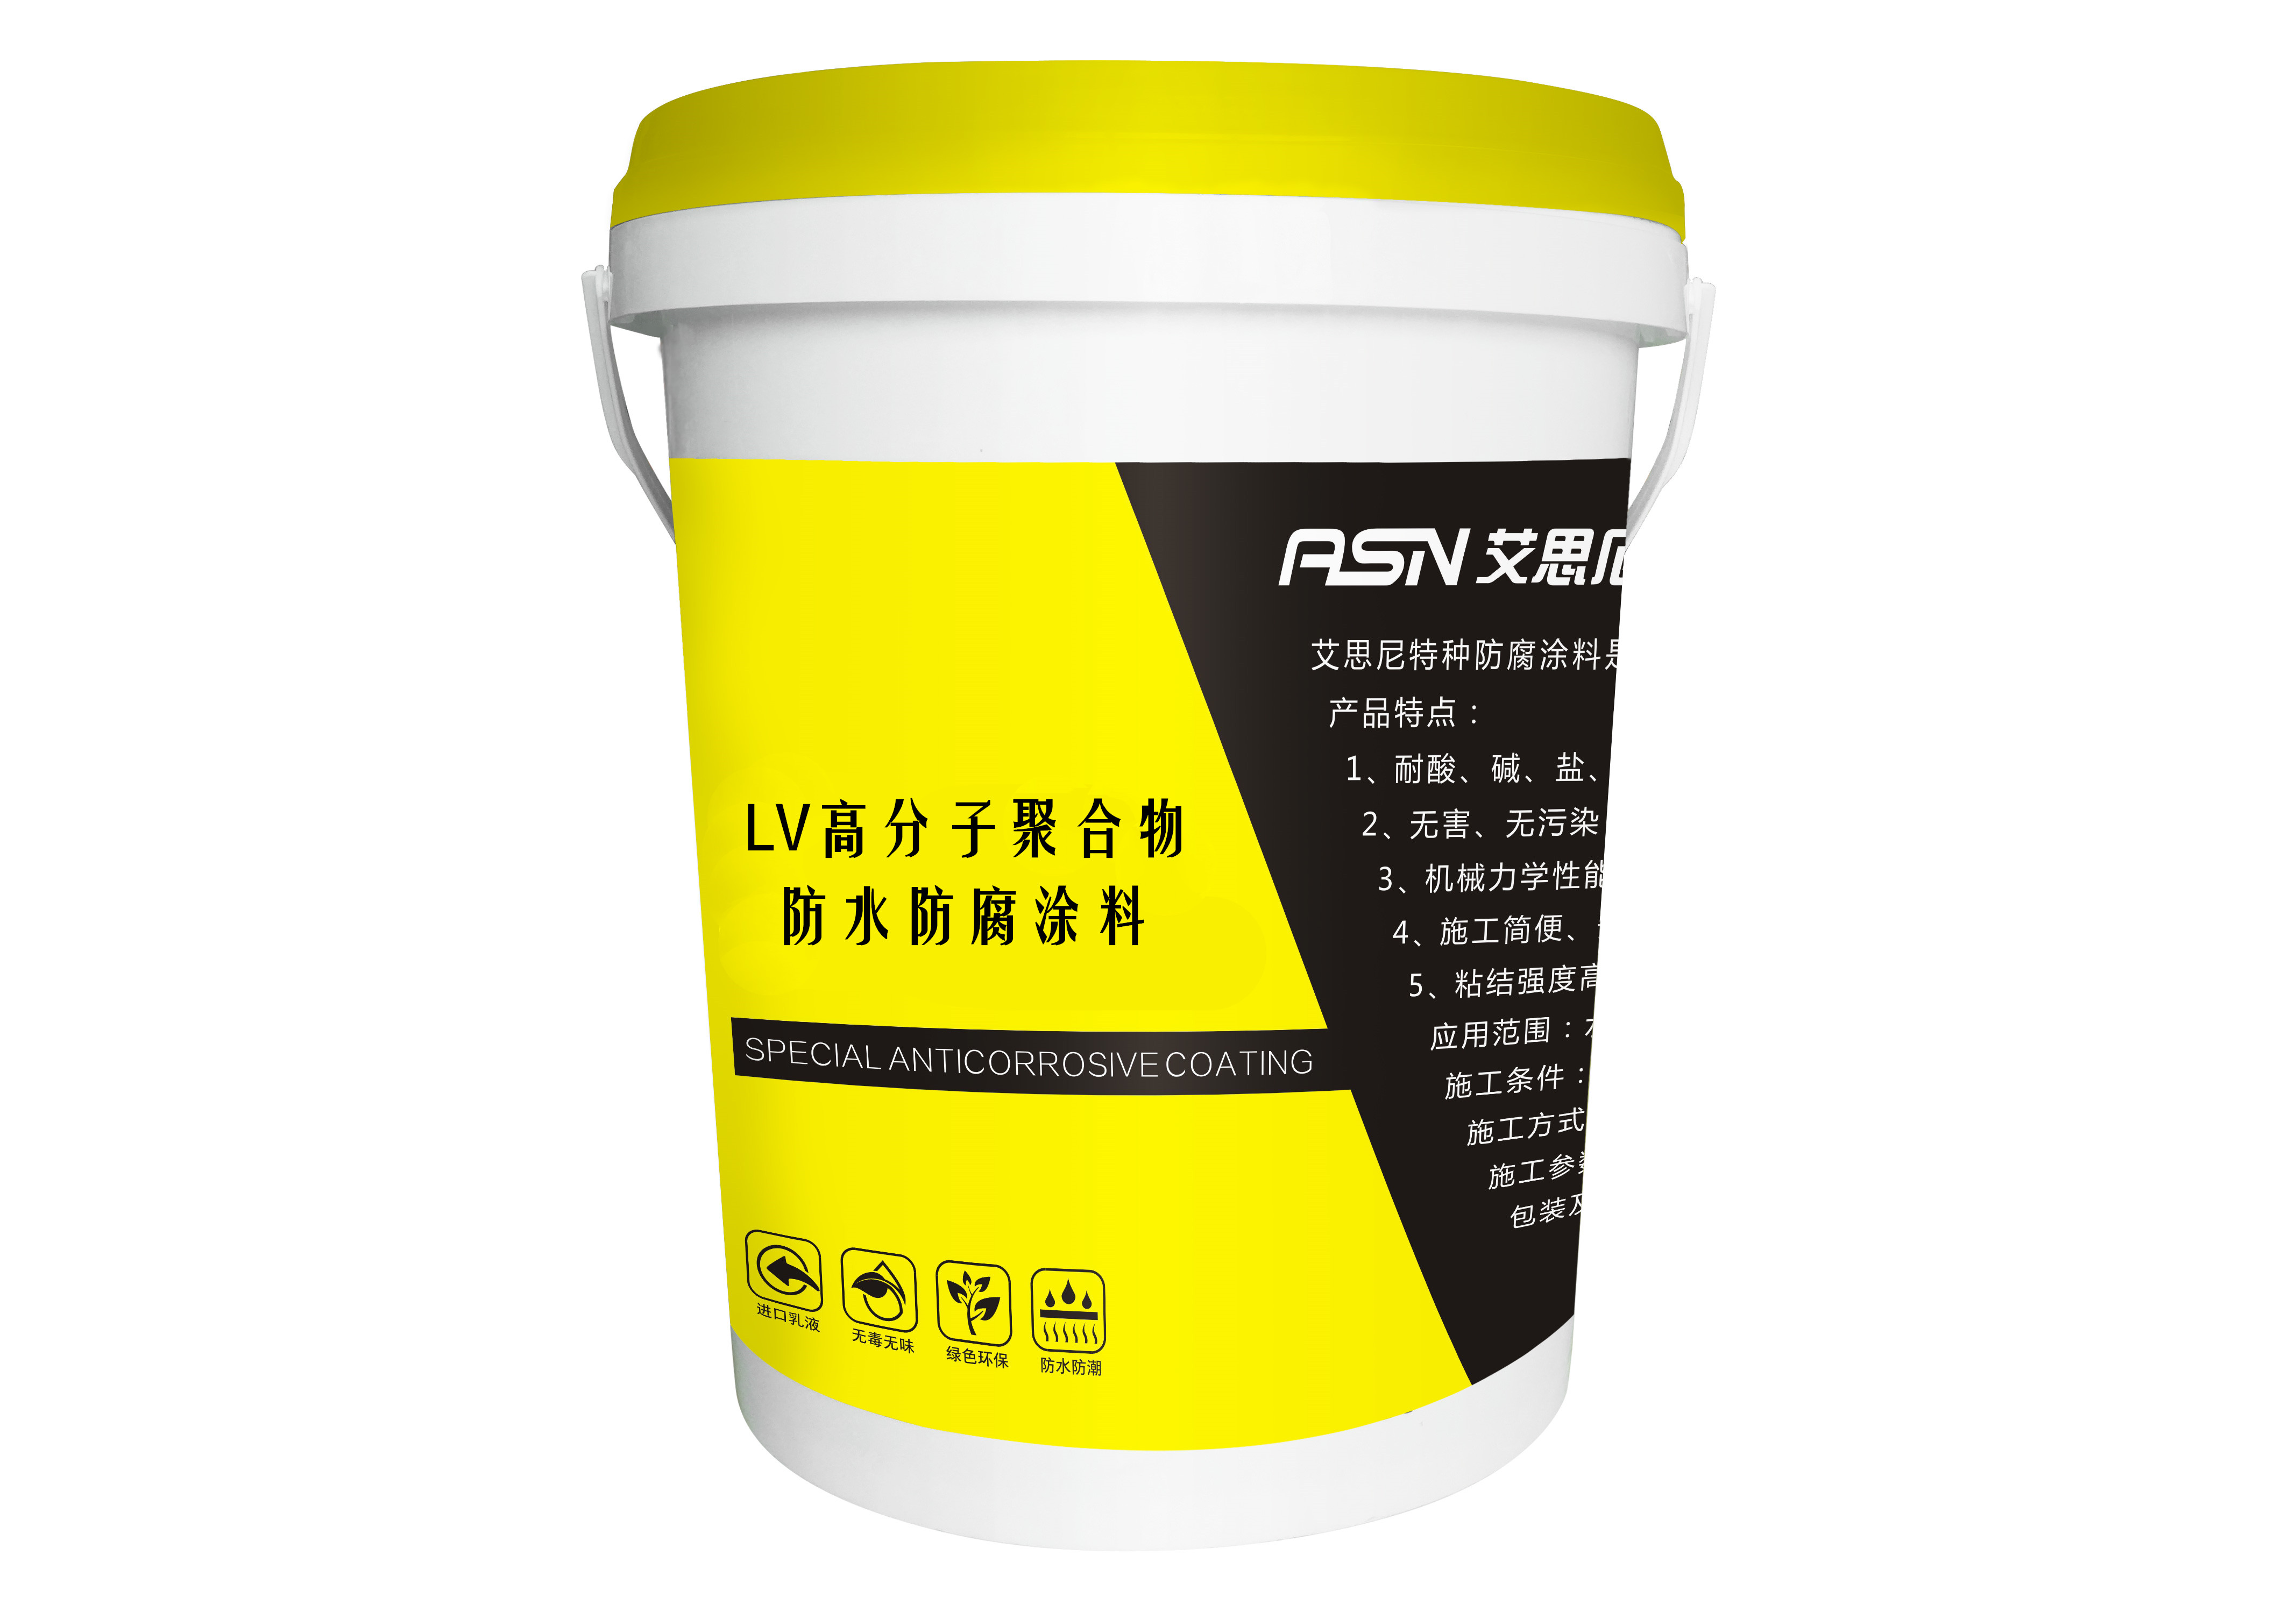 LV高分子聚合物水泥防水防腐涂料